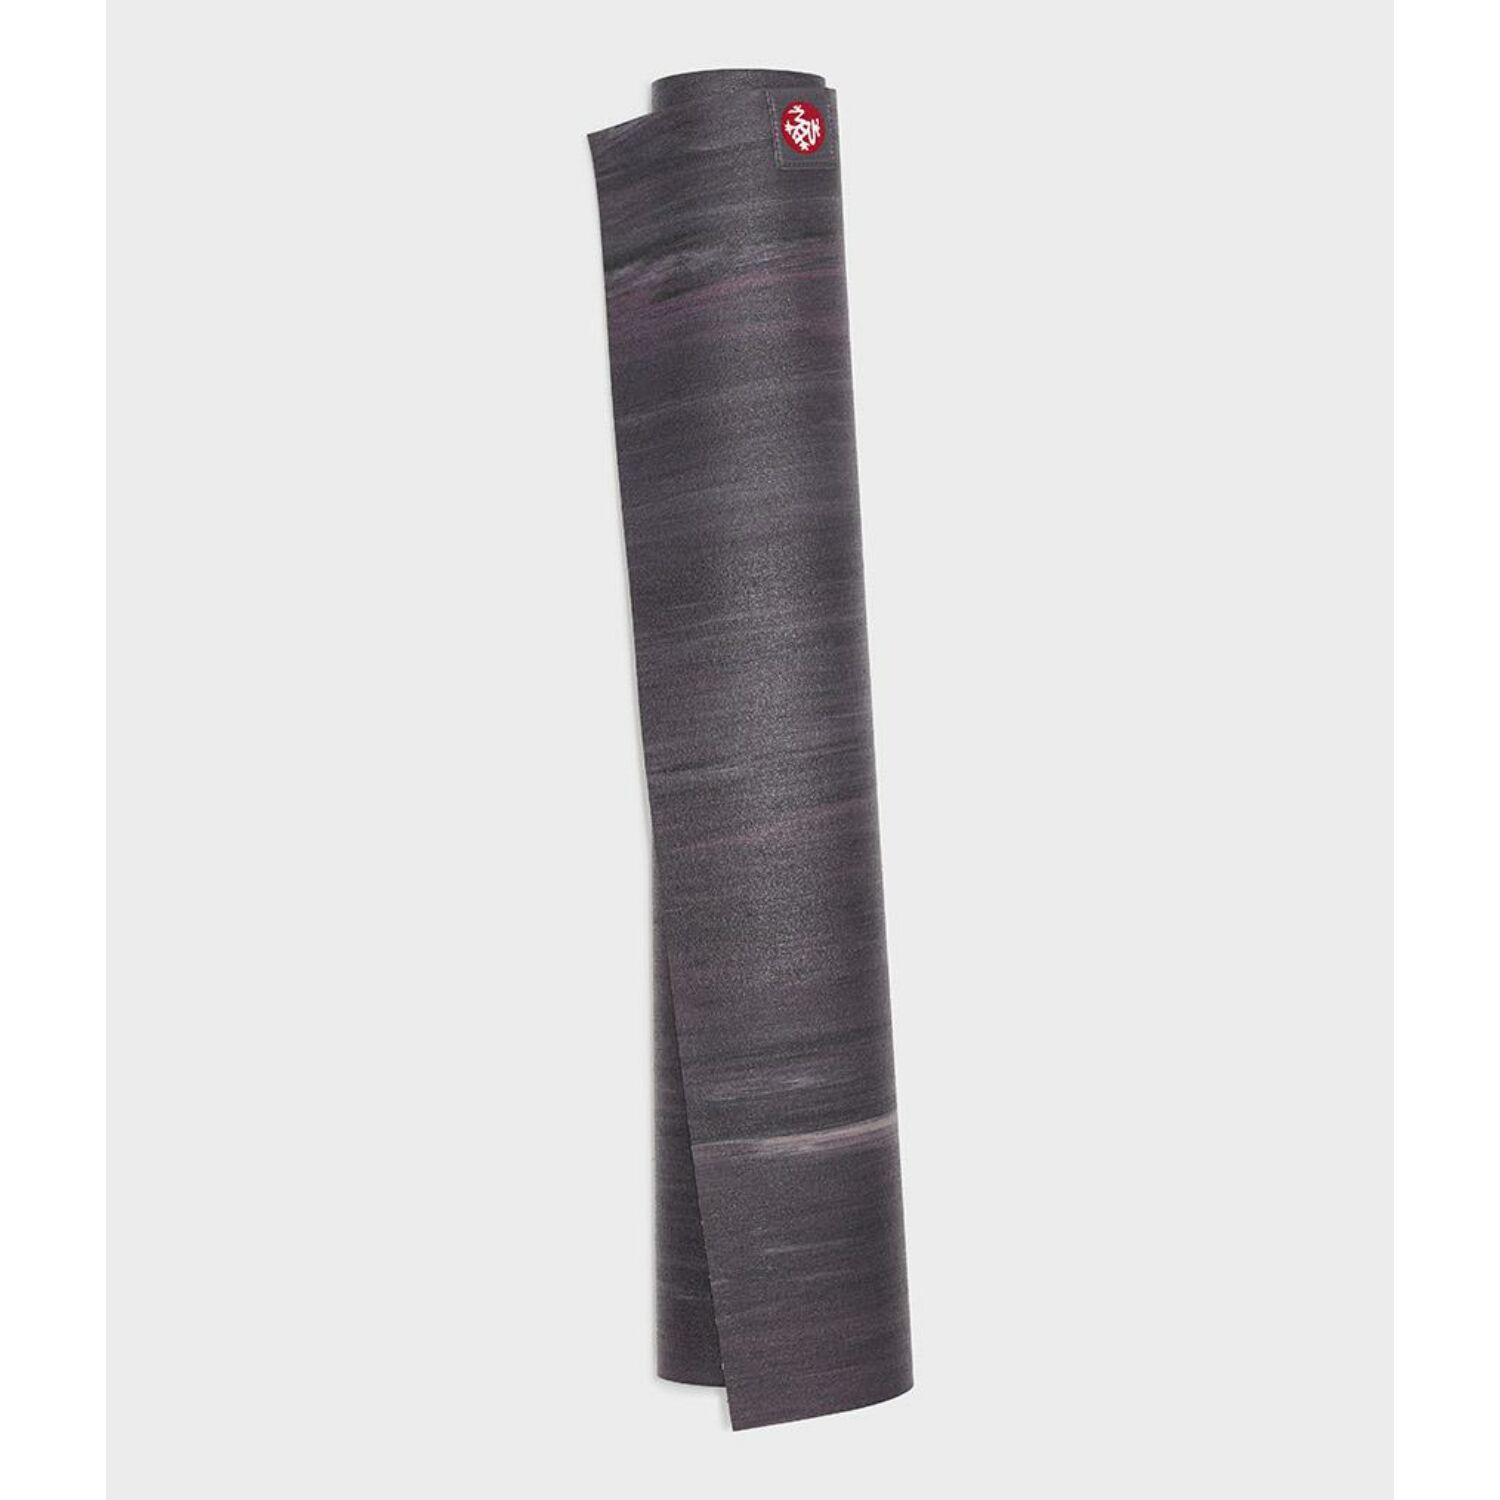 Manduka eKO SuperLite utazó jógamatrac (1,5 mm) - Black Amethyst Marbled